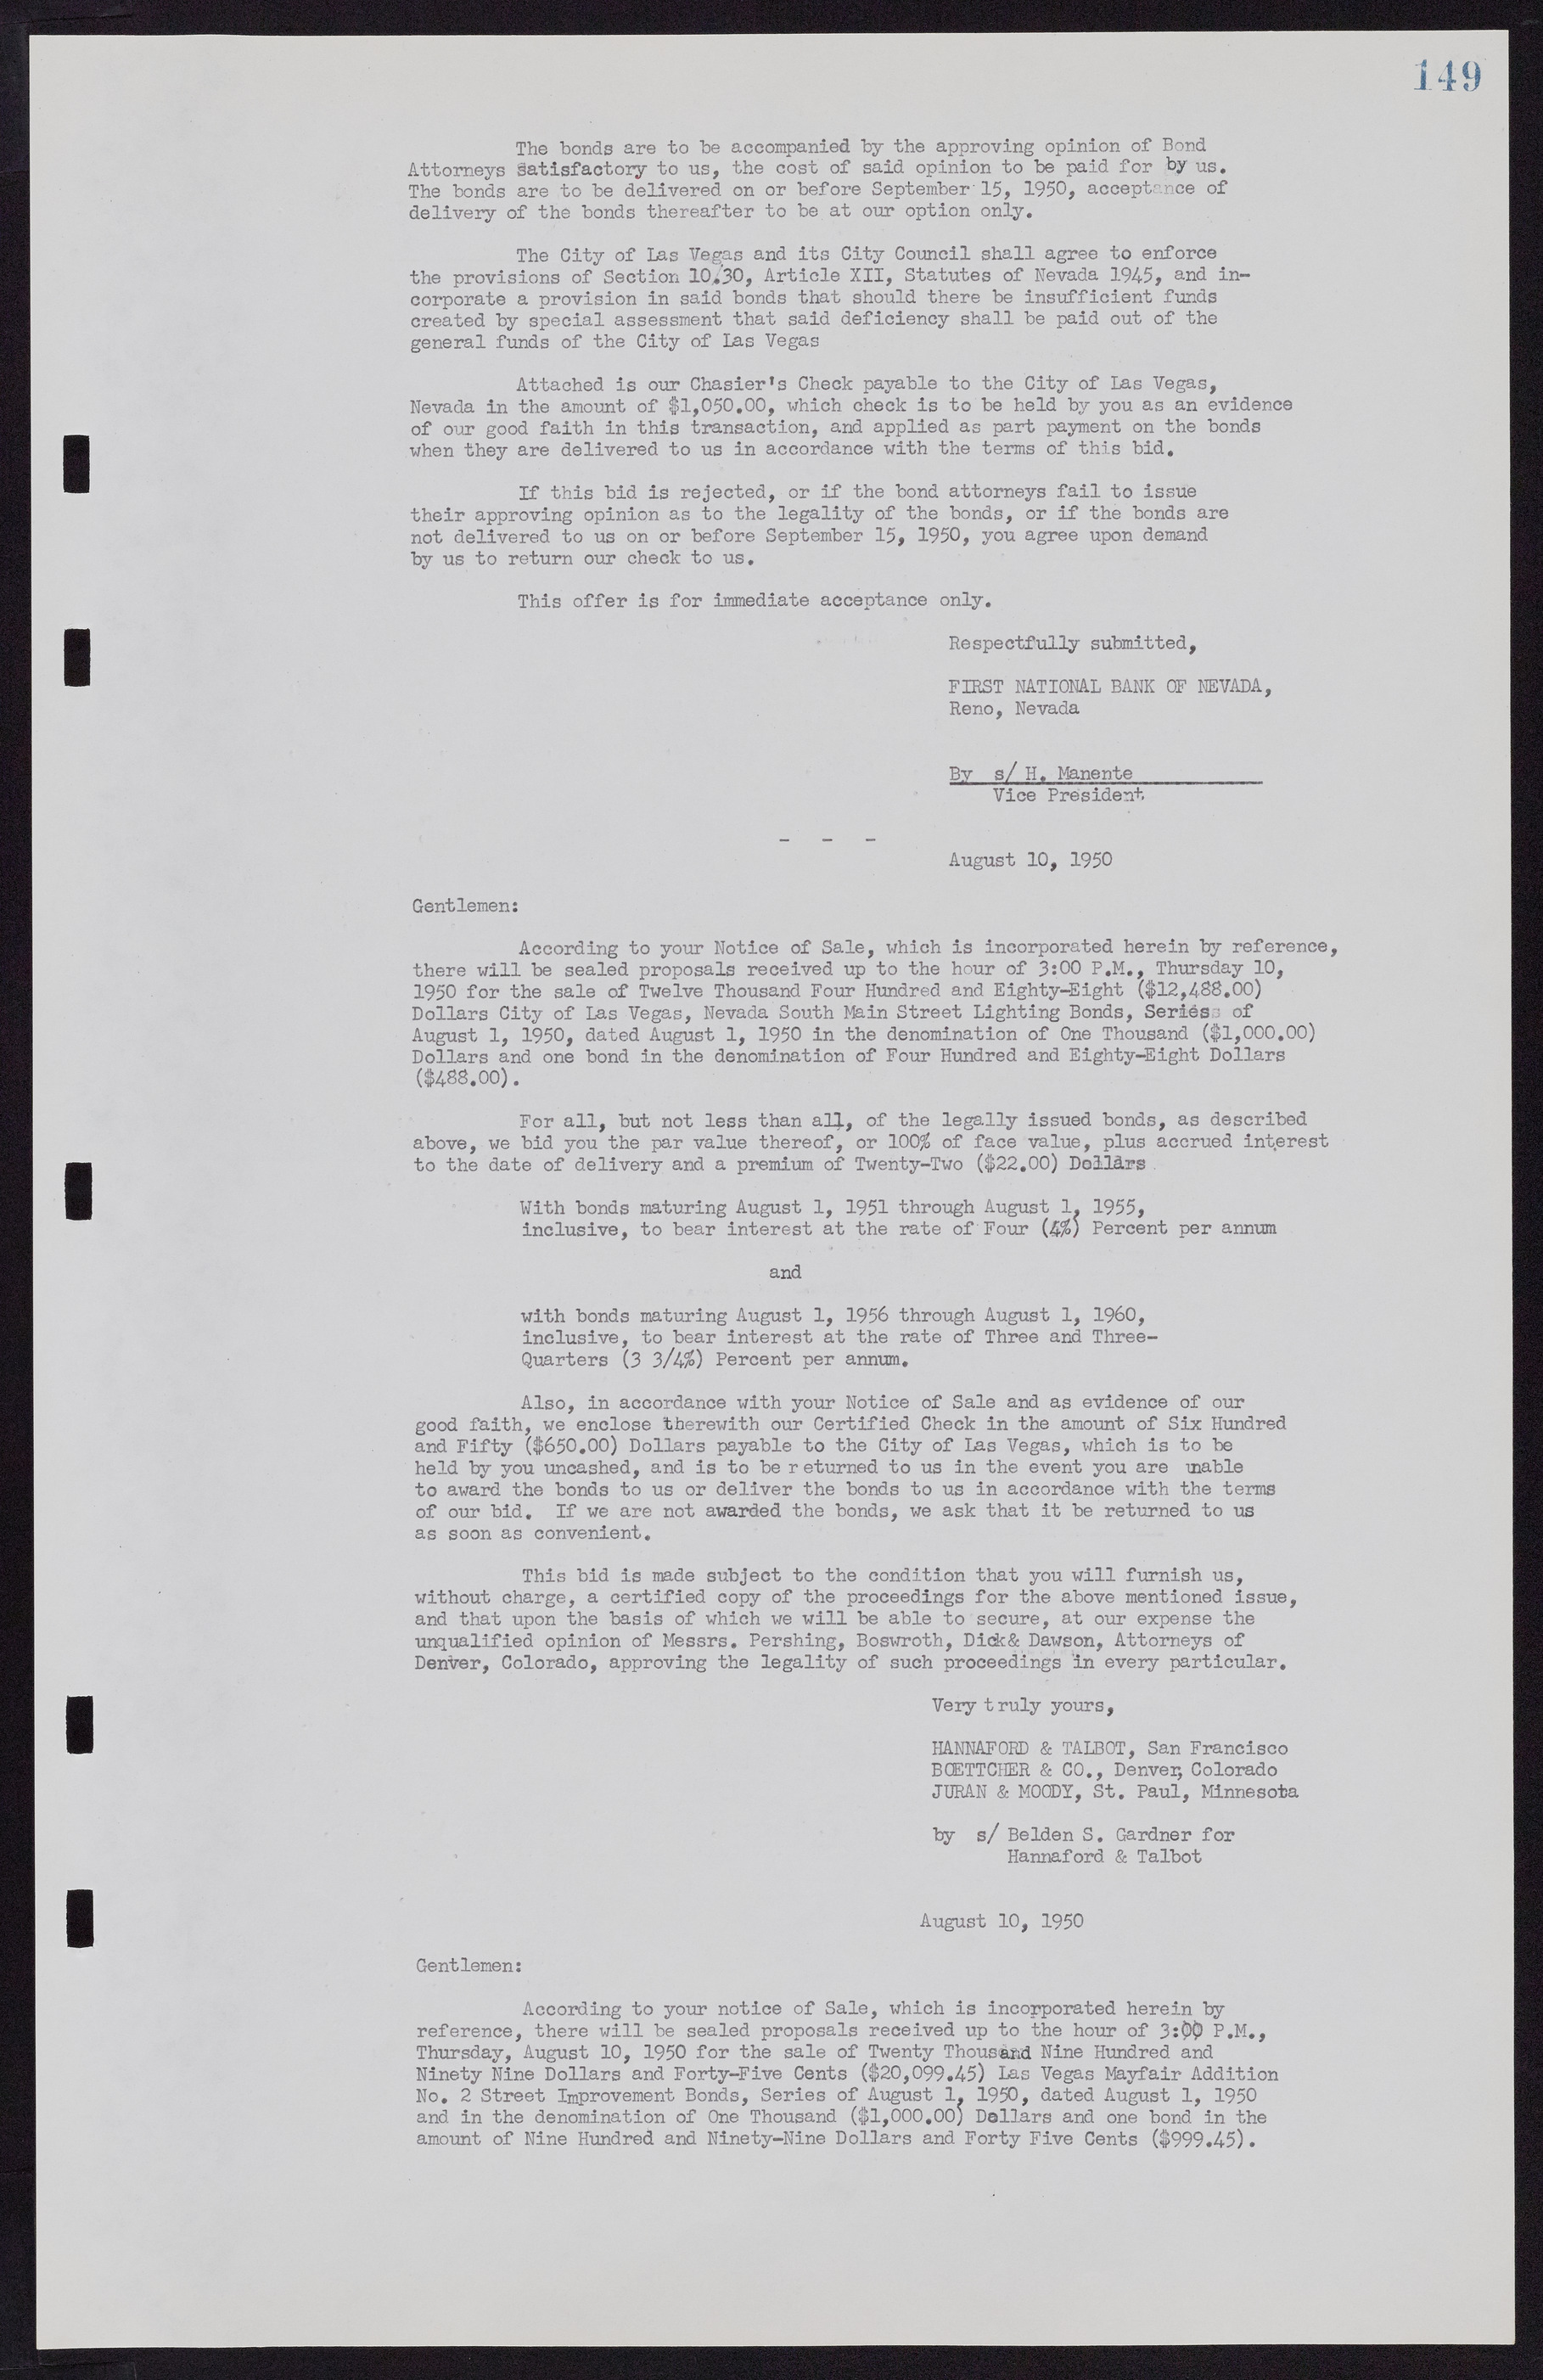 Las Vegas City Commission Minutes, November 7, 1949 to May 21, 1952, lvc000007-159